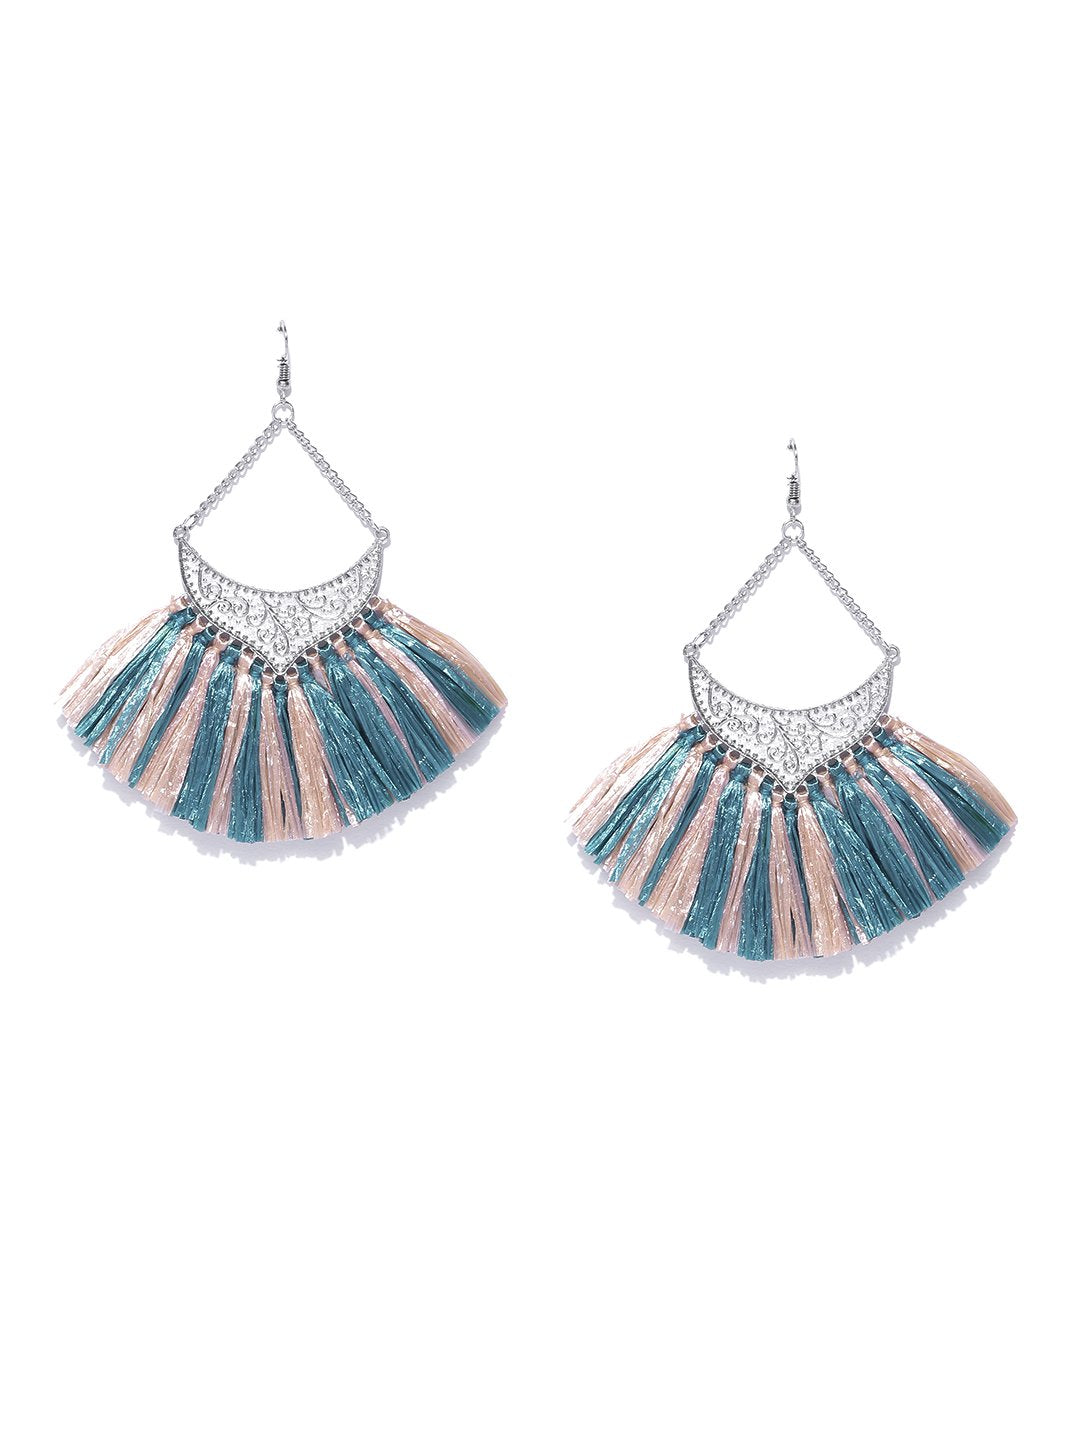 Blueberry silver and peach tassel earrings